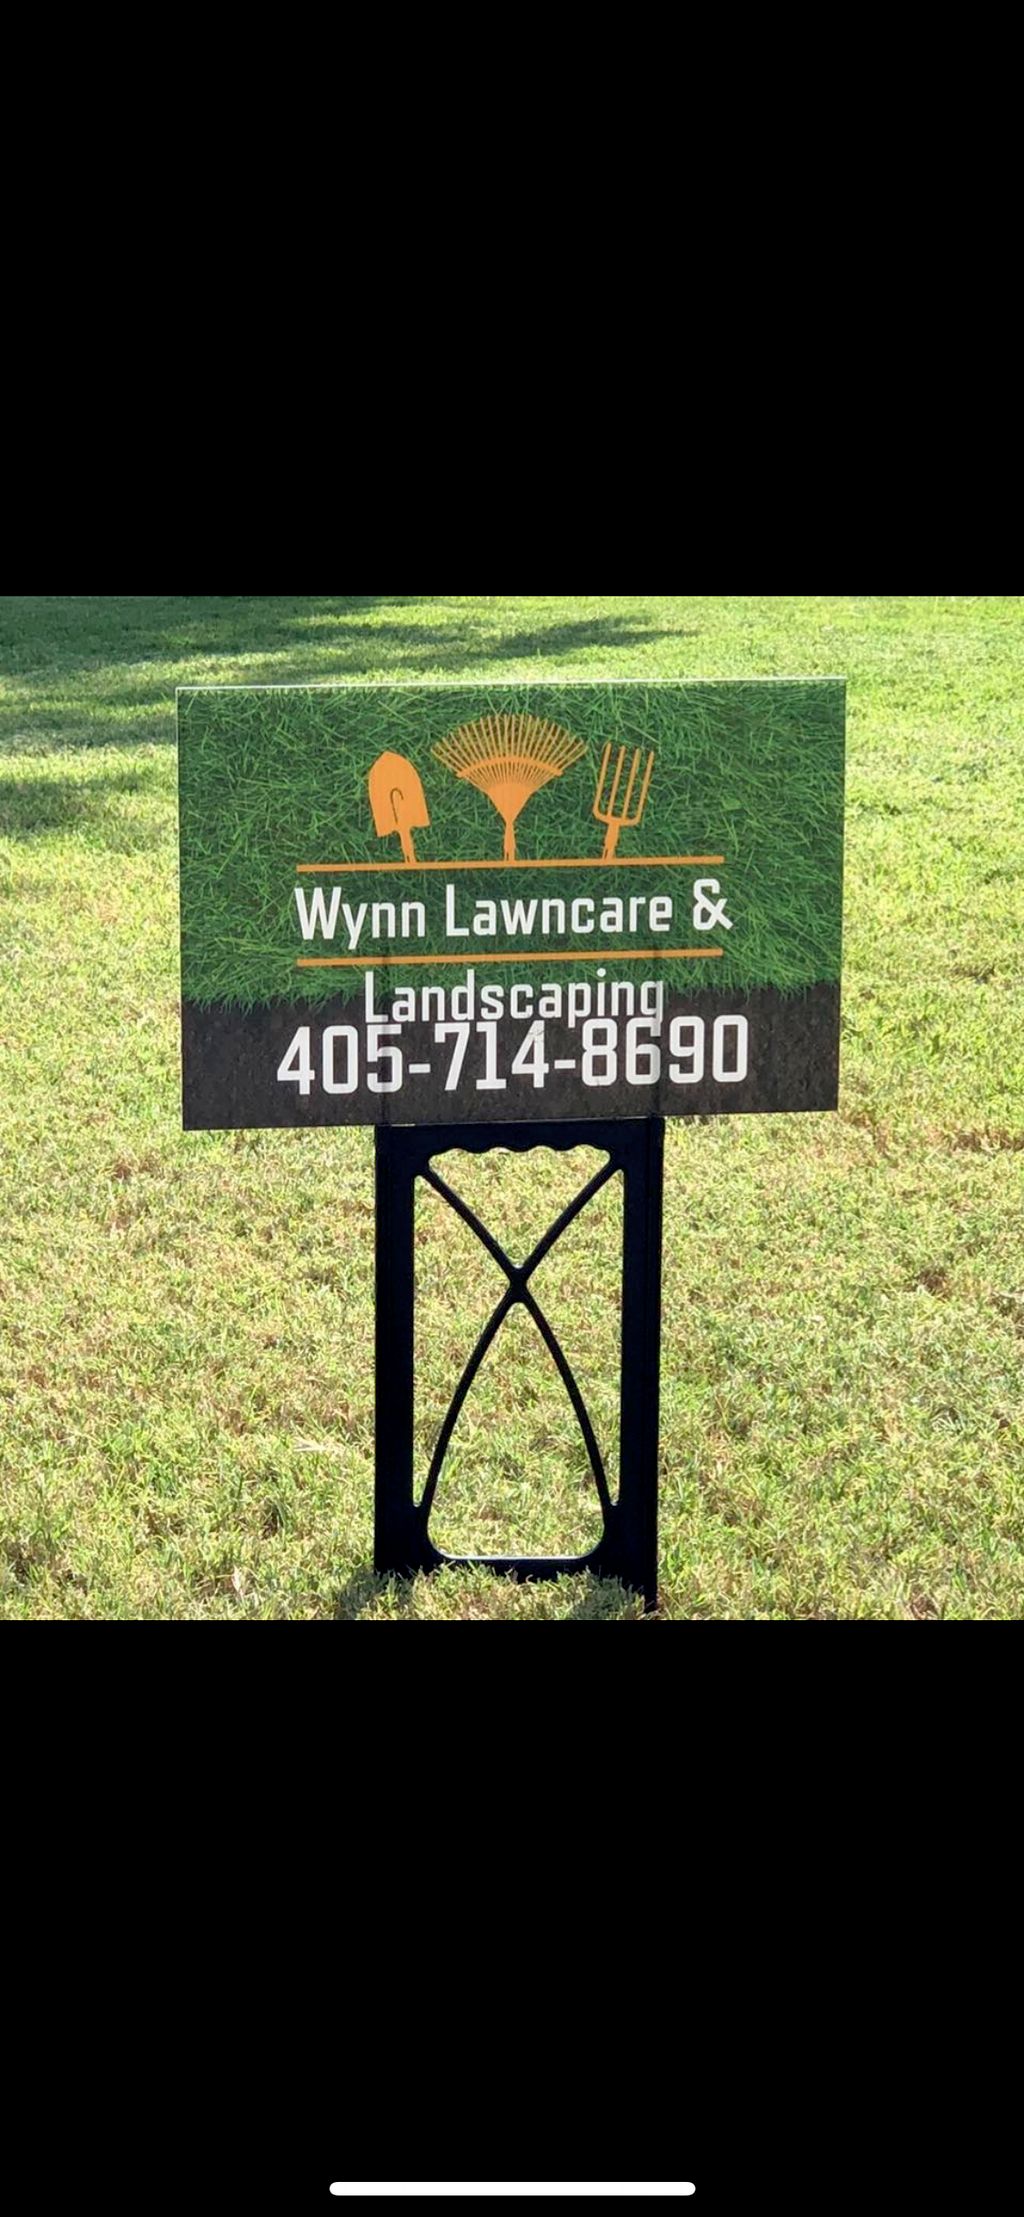 Wynn Lawncare & Landscaping